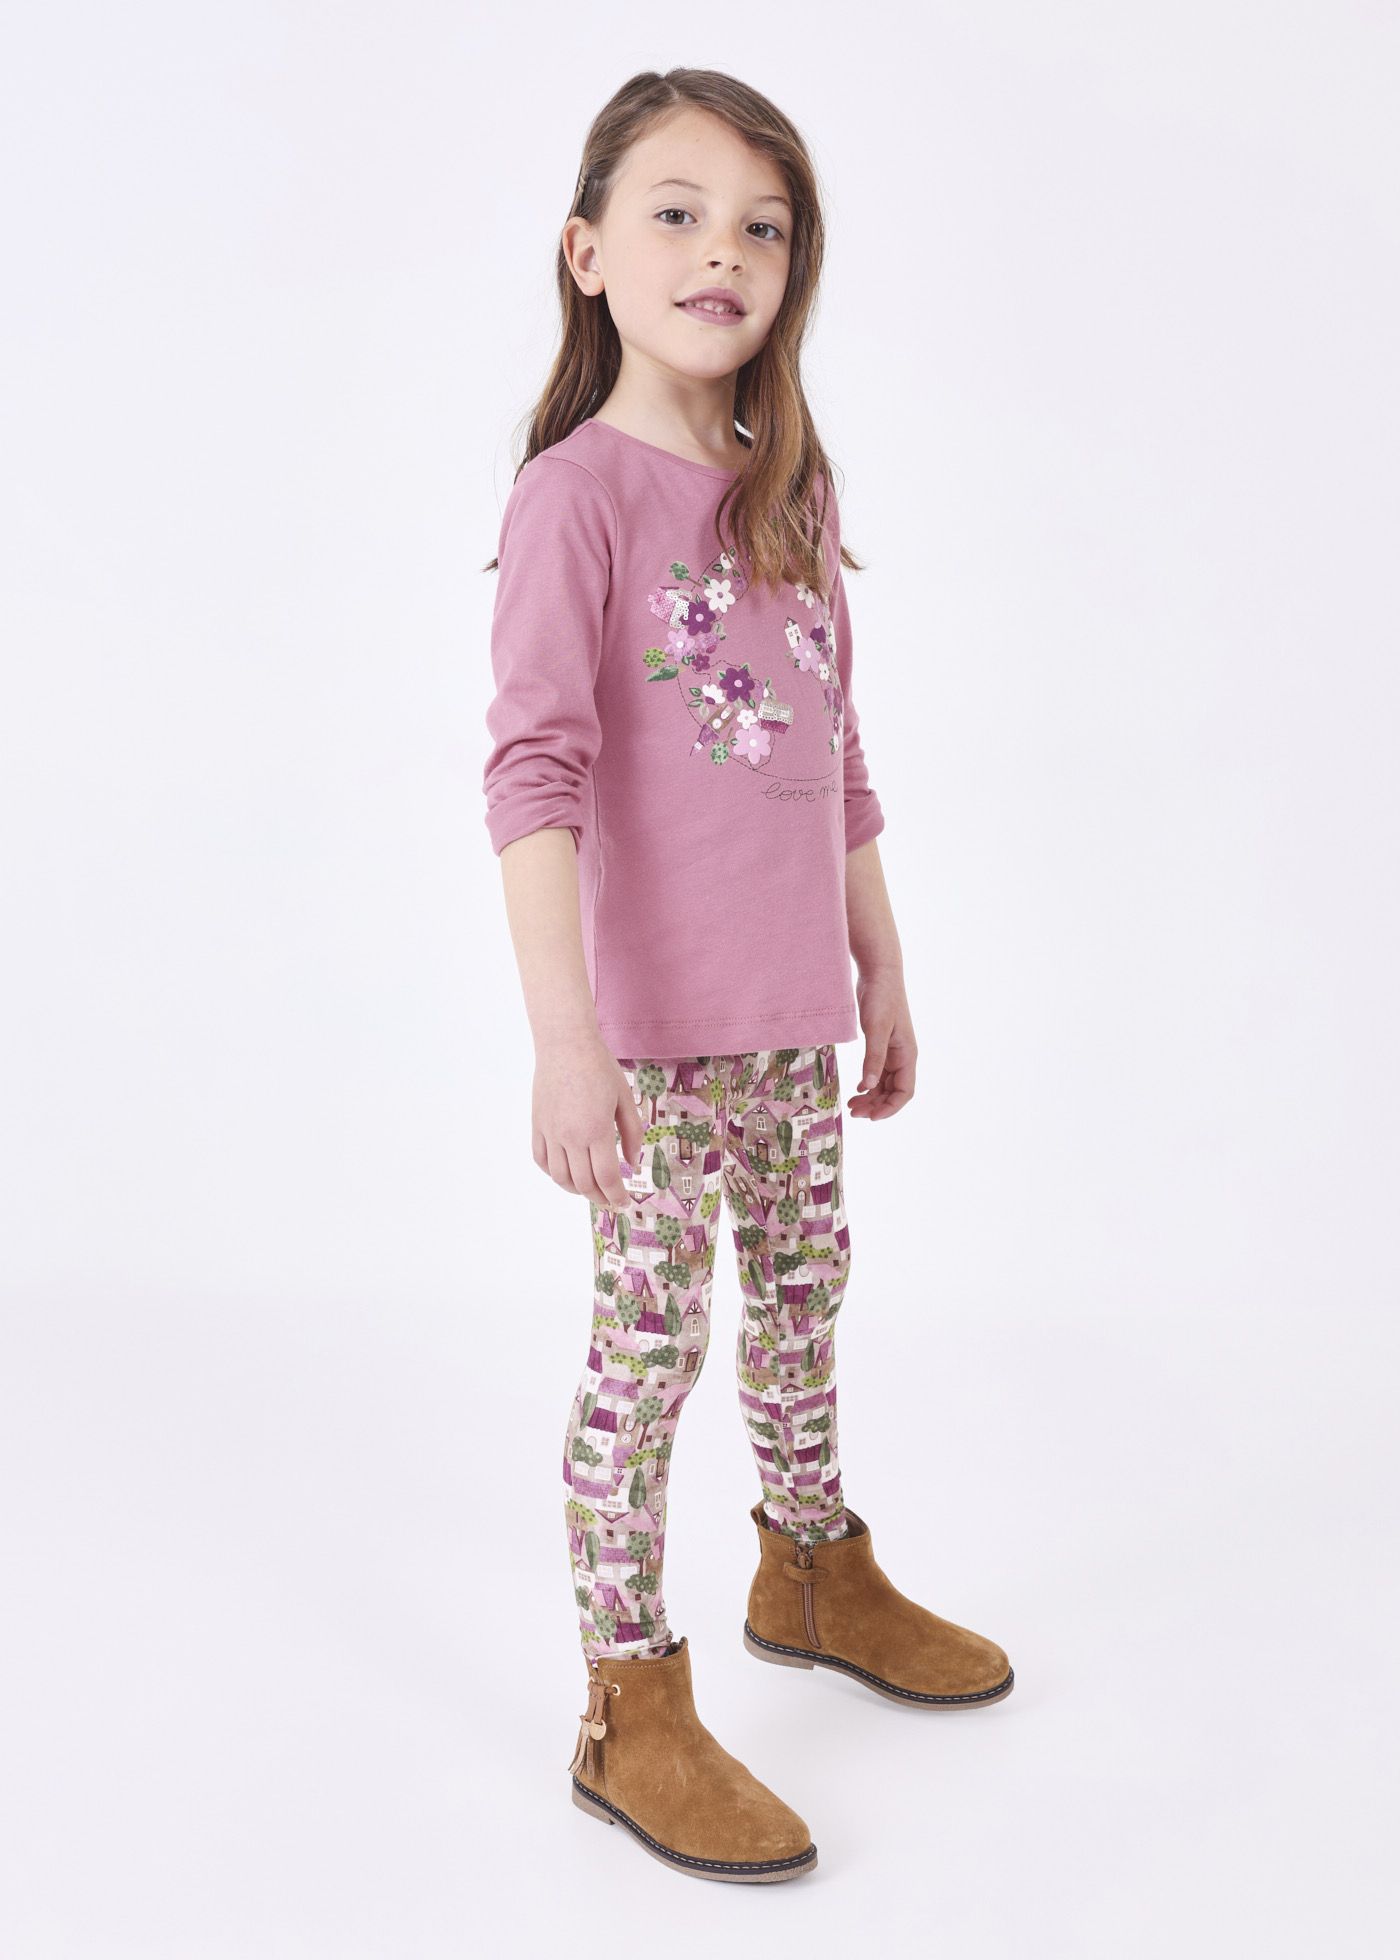 Mayoral girls top & leggings 4746-021 Cerise designer outfits for baby boy  & girls.